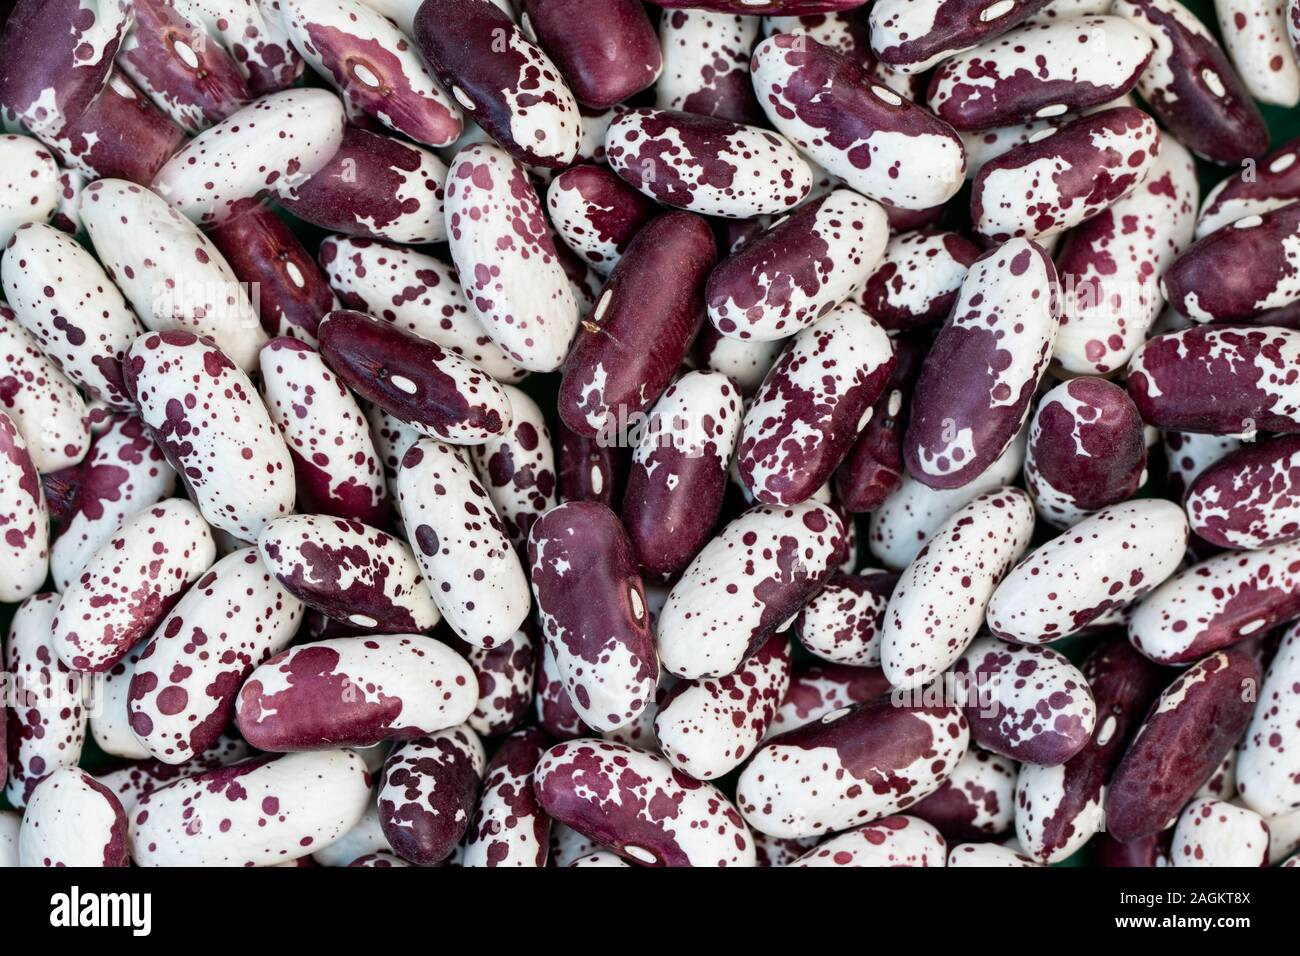 Bean pint close-up. Spain Stock Photo